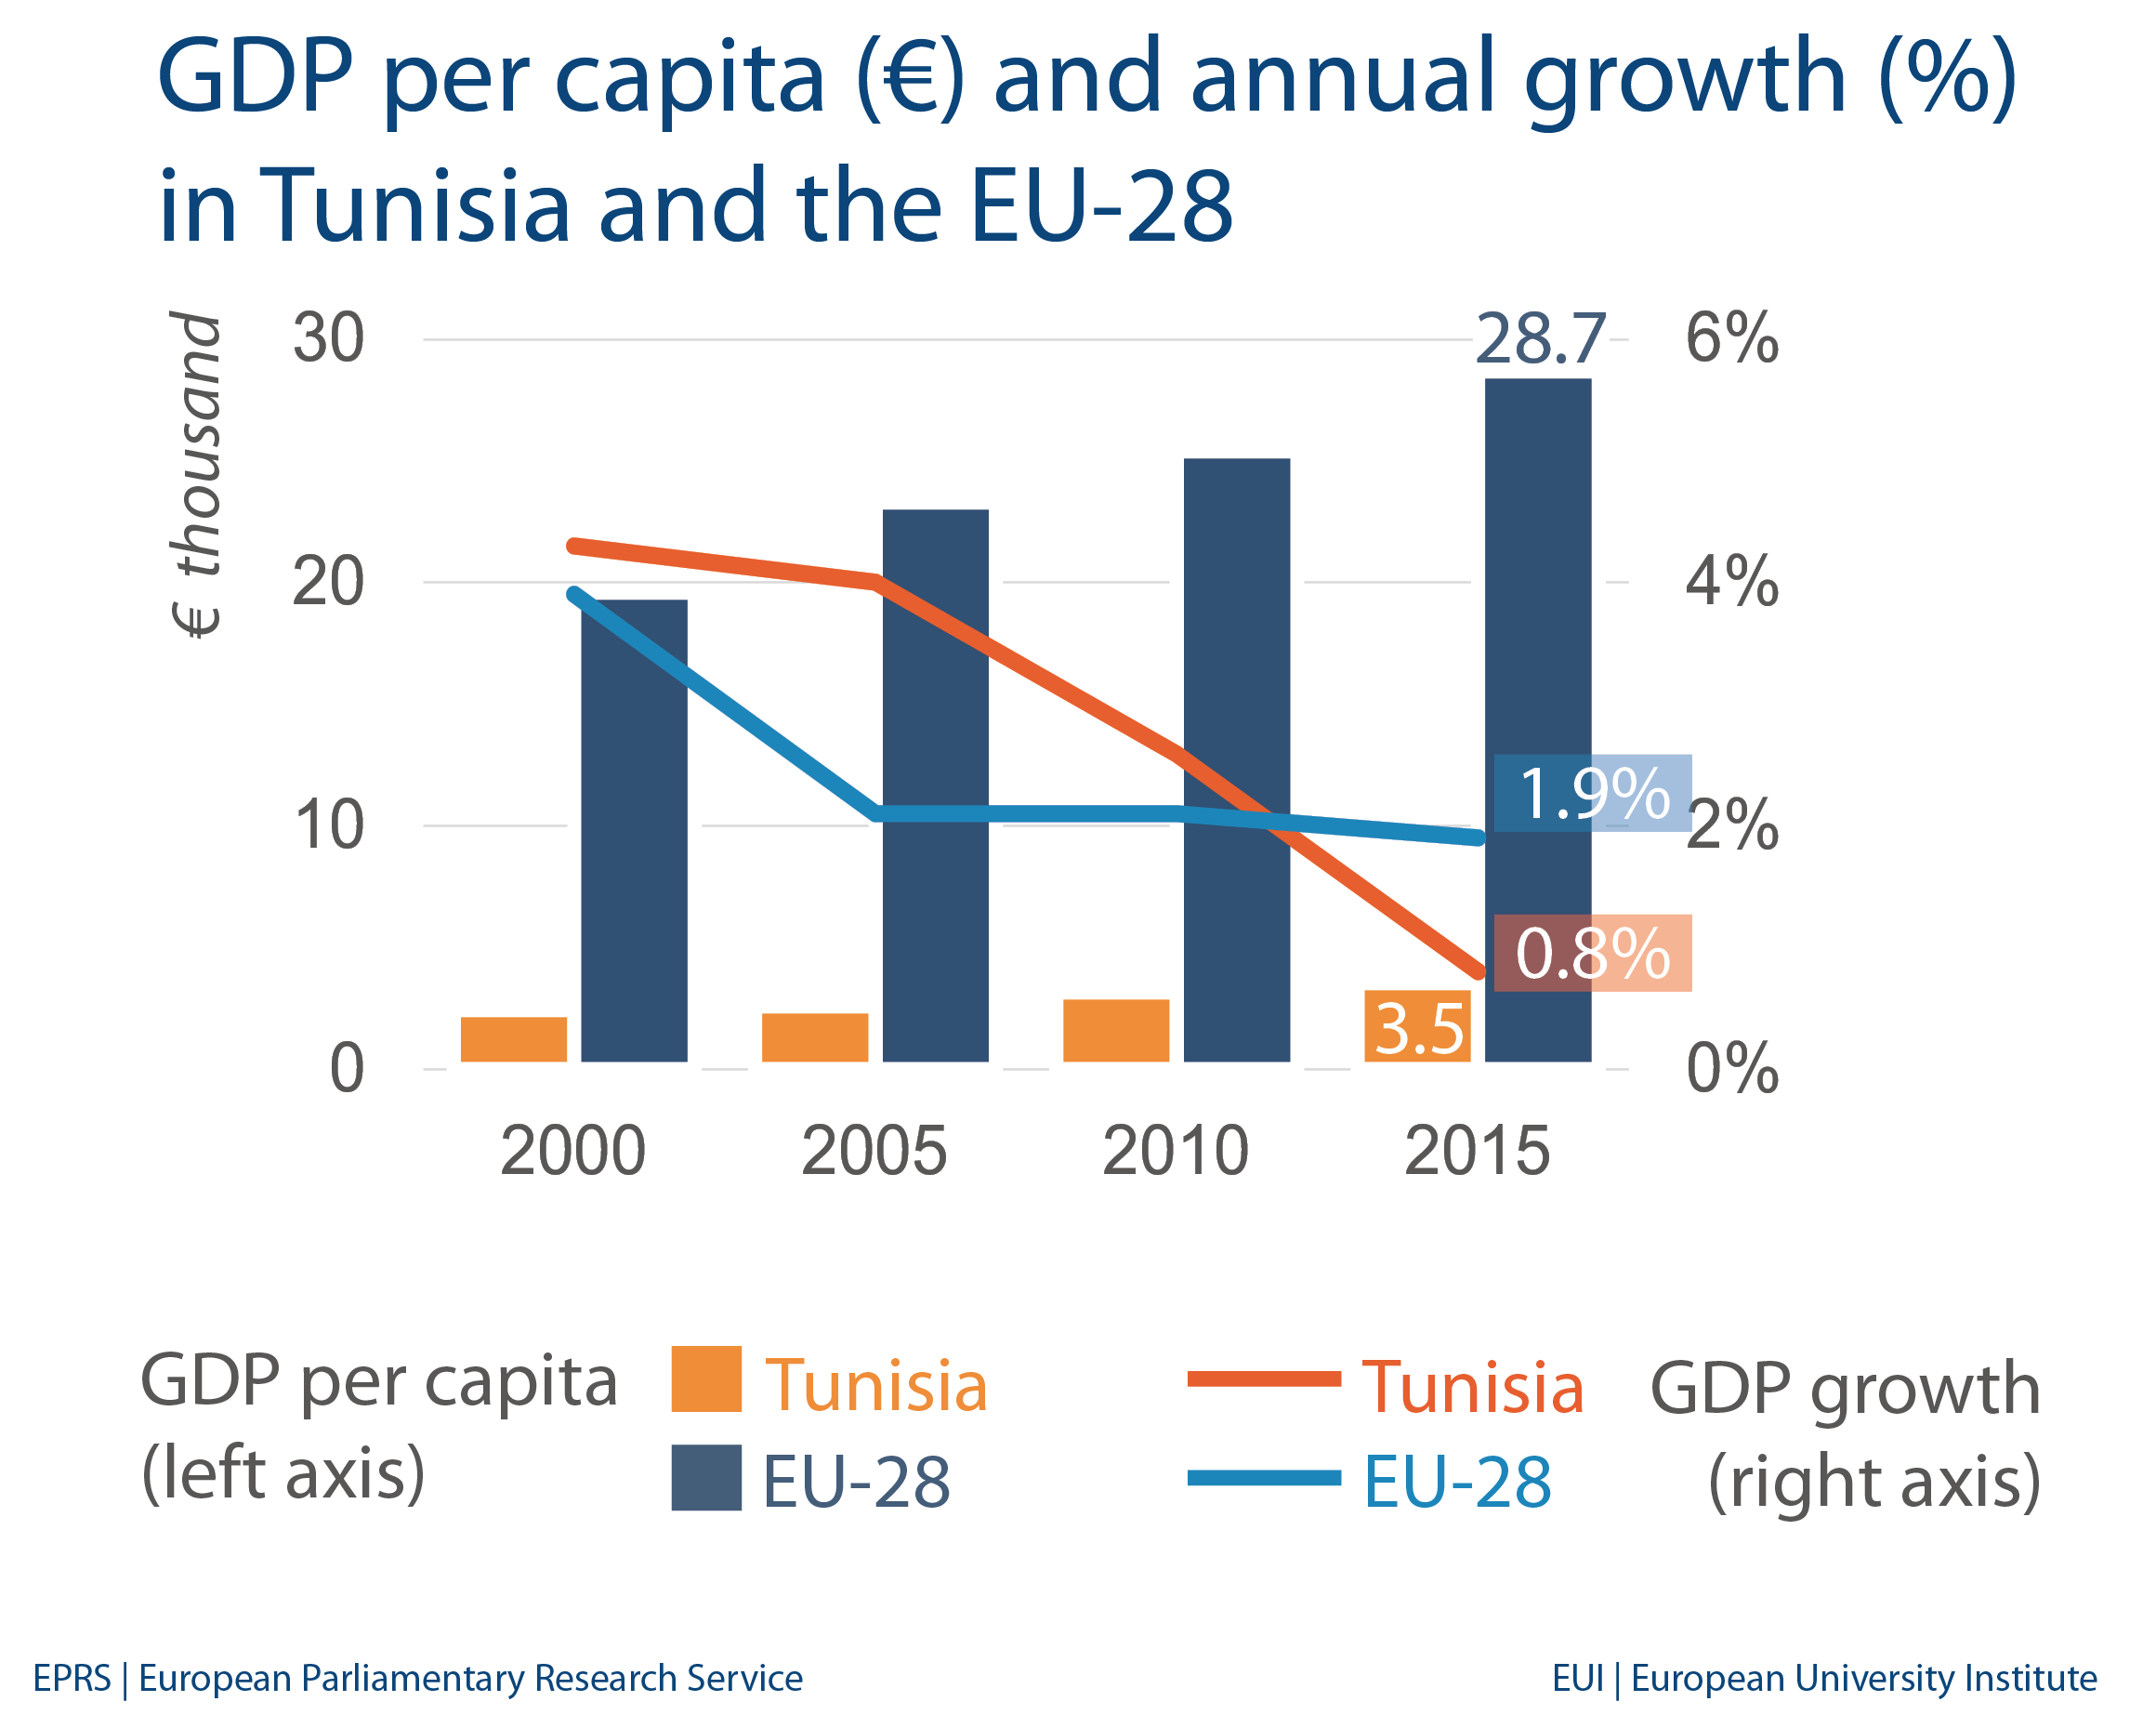 Tunisia: Economic indicators and trade with EU